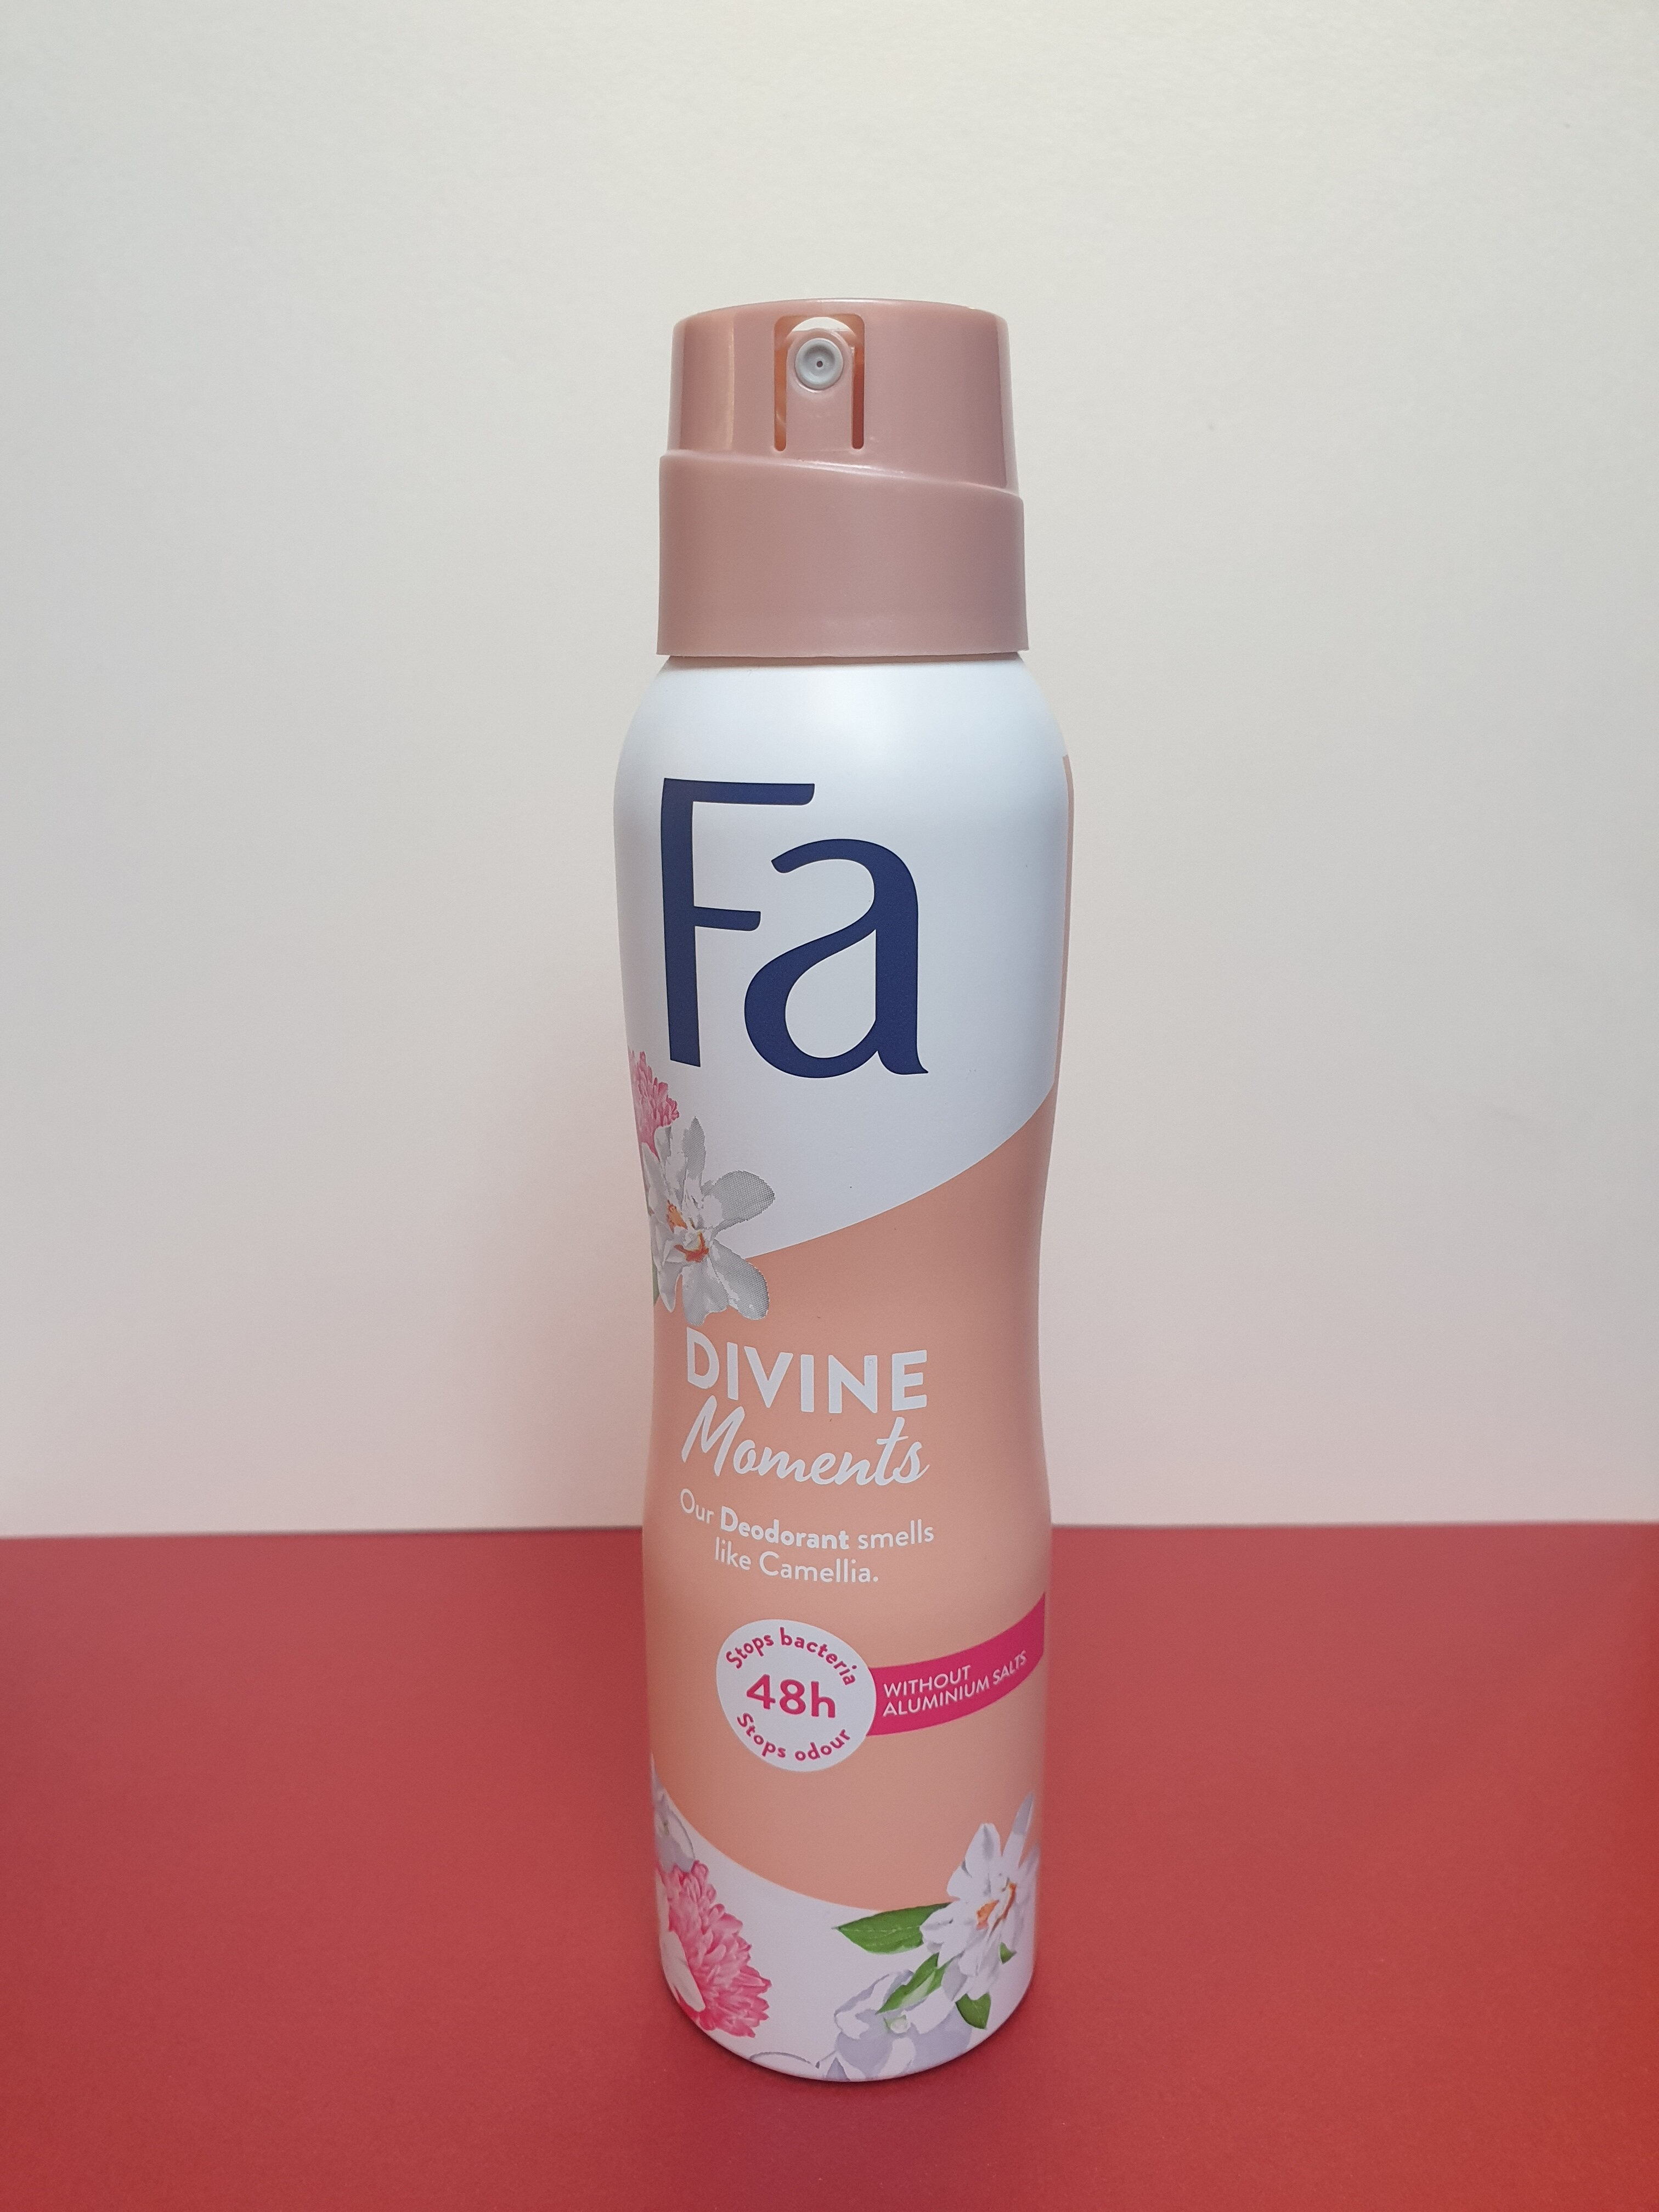 Fa Divine Moments Deodorant - Product - hu